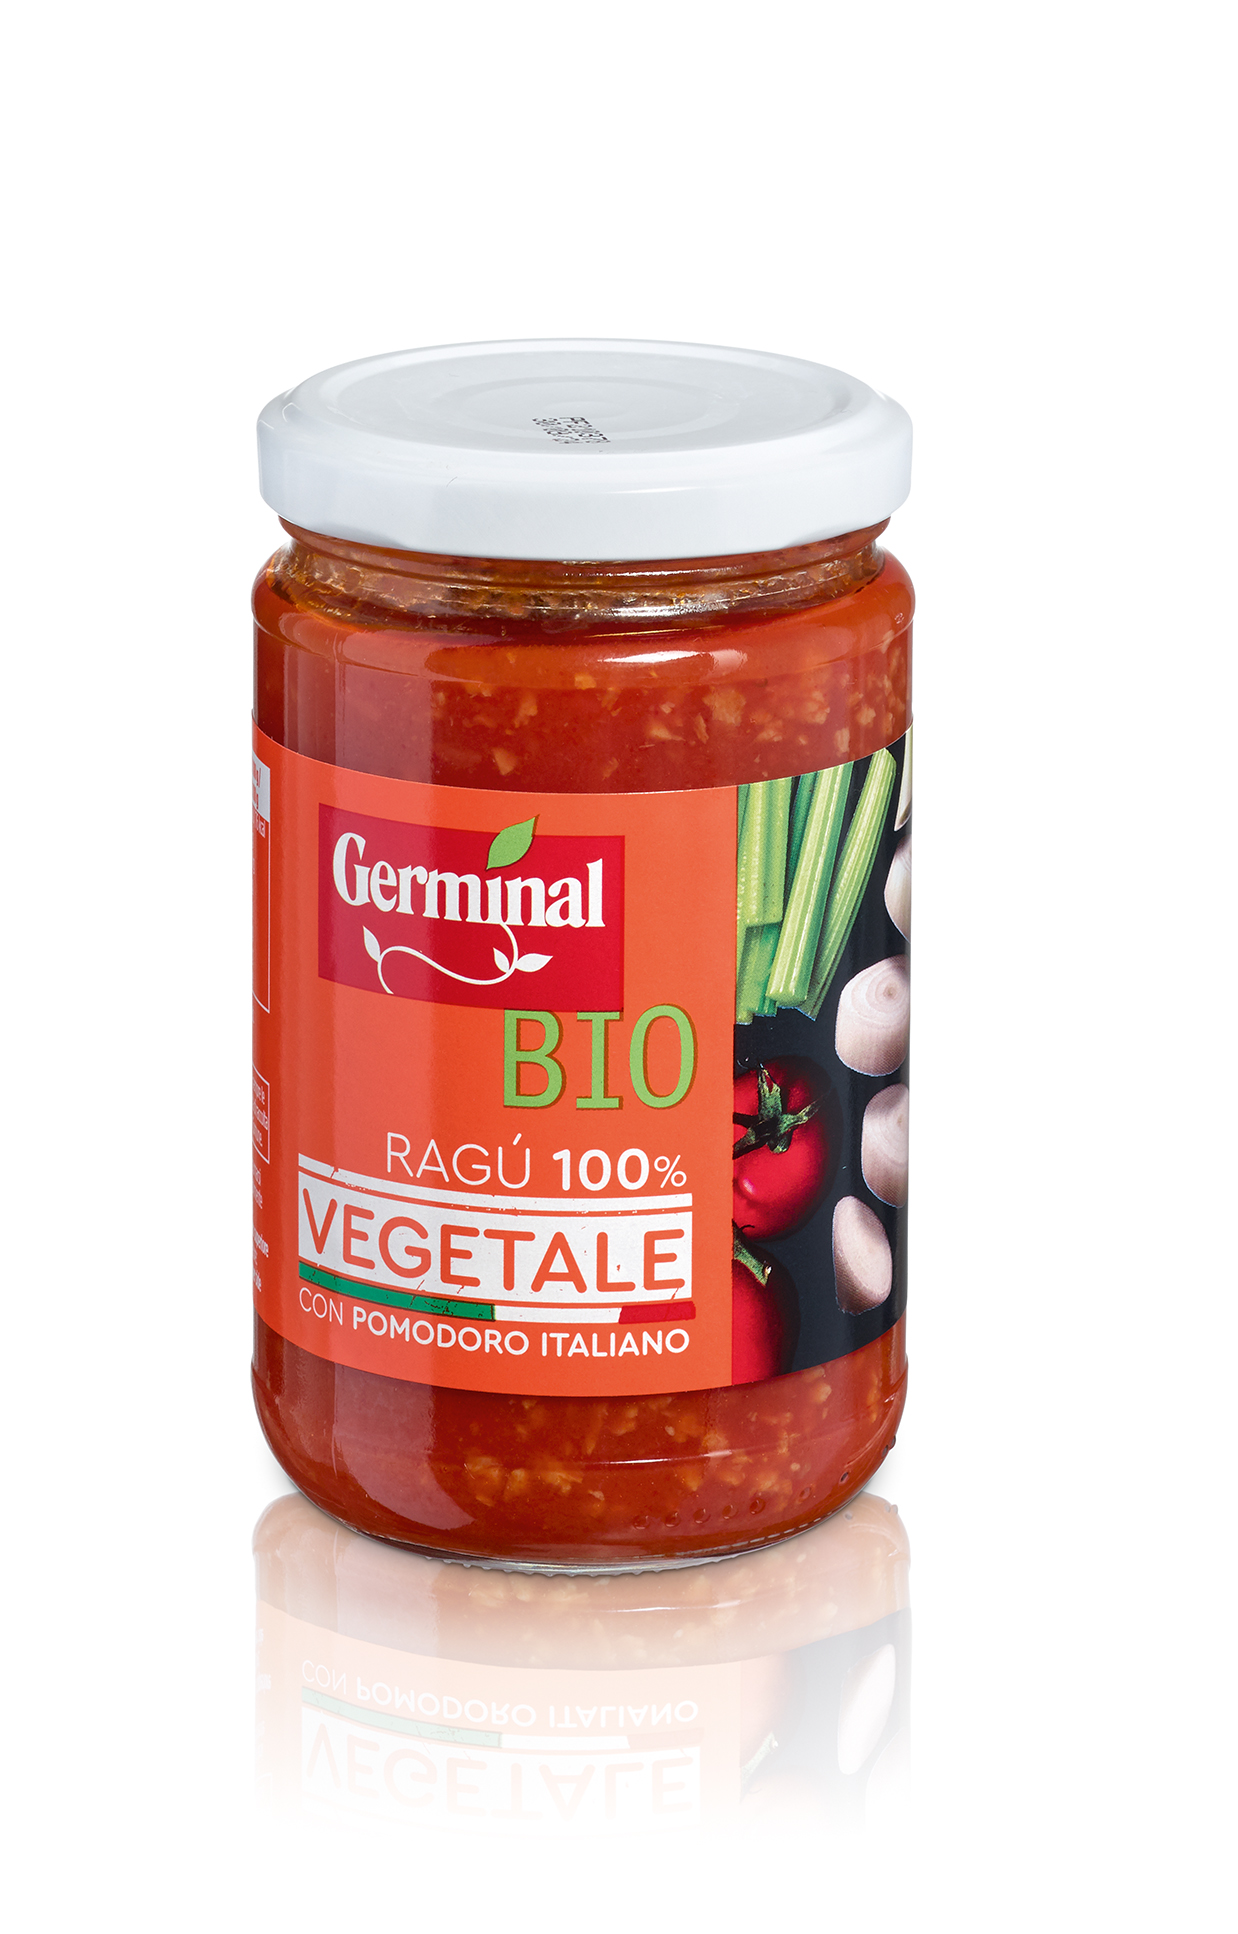 Image:  Ragù 100% Vegetale